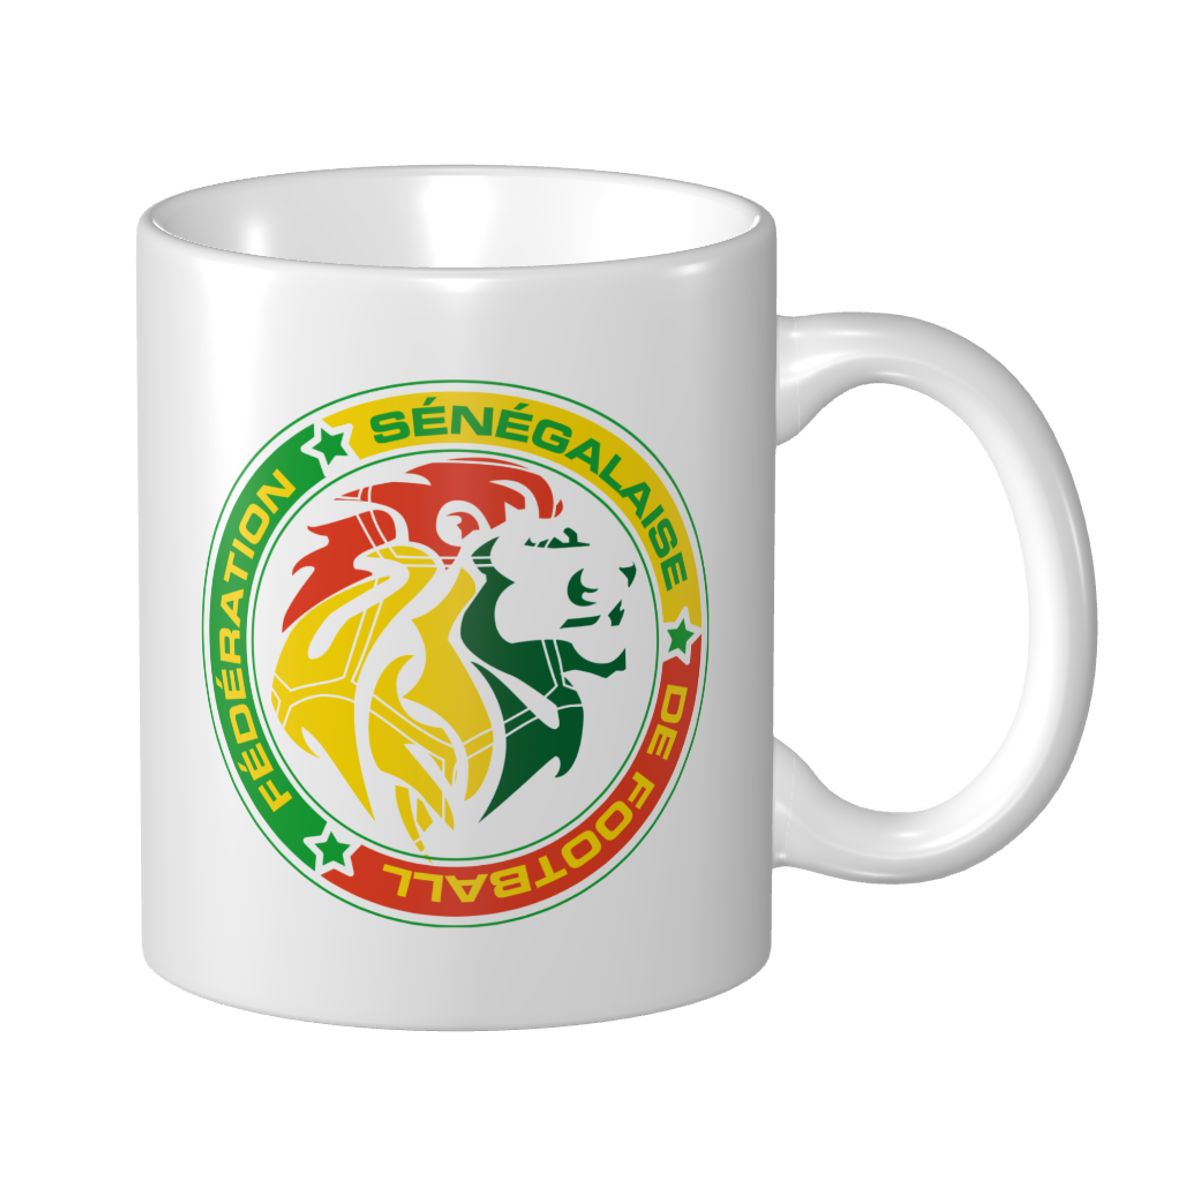 Senegal National Football Team Mug